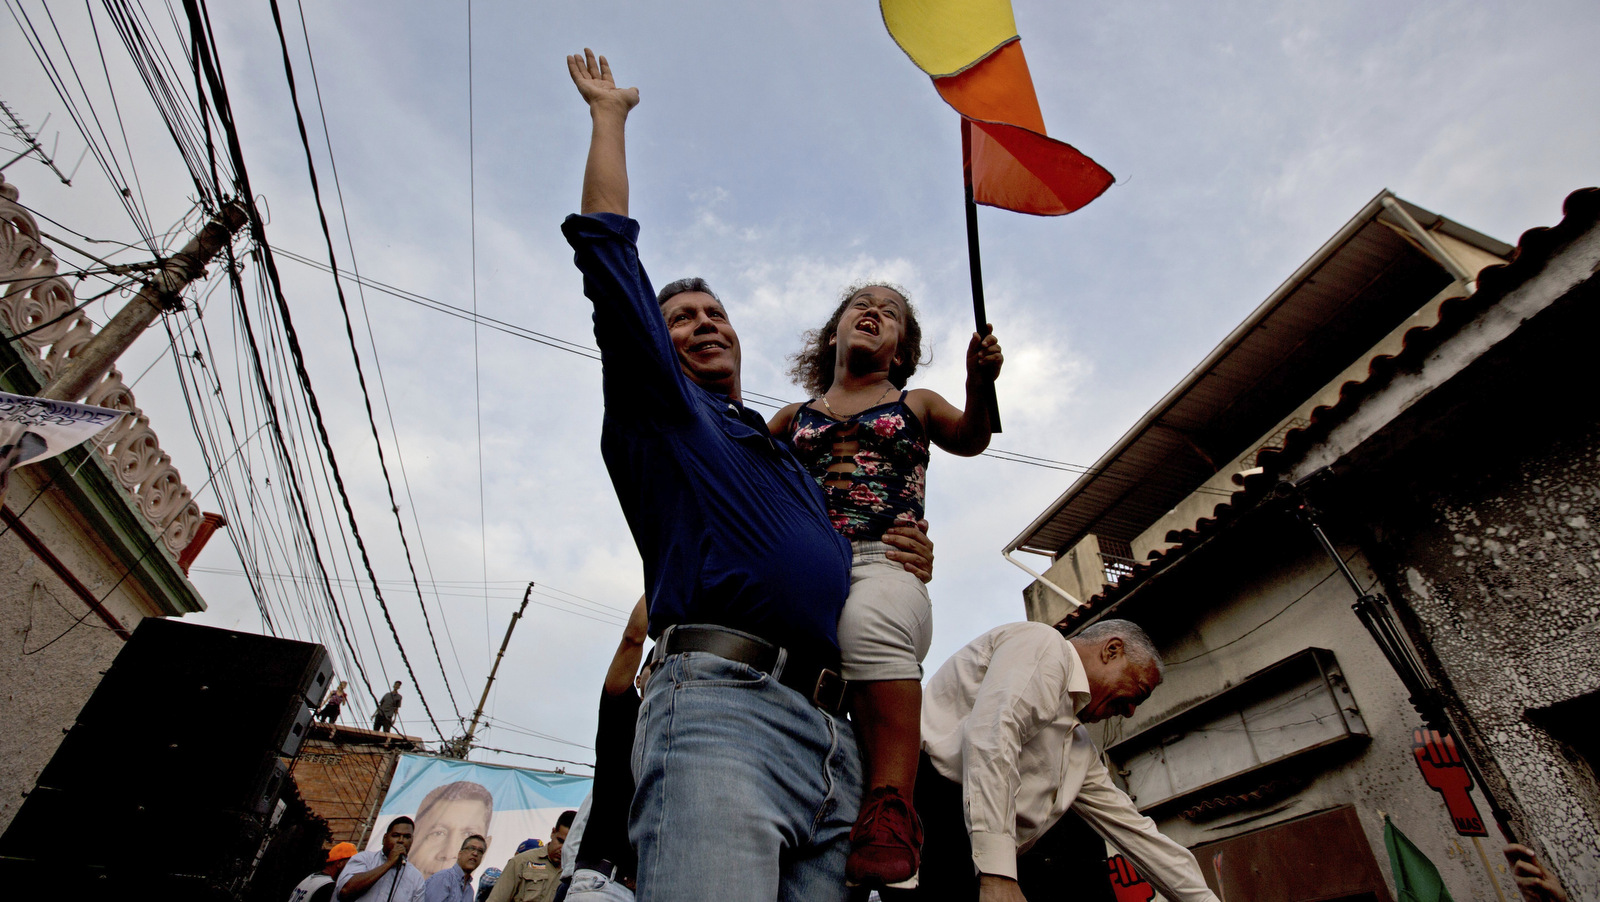 Henri Falcon, left, holds up a woman during a rally in Caracas, Venezuela, May 14, 2018. Fernando Llano | AP